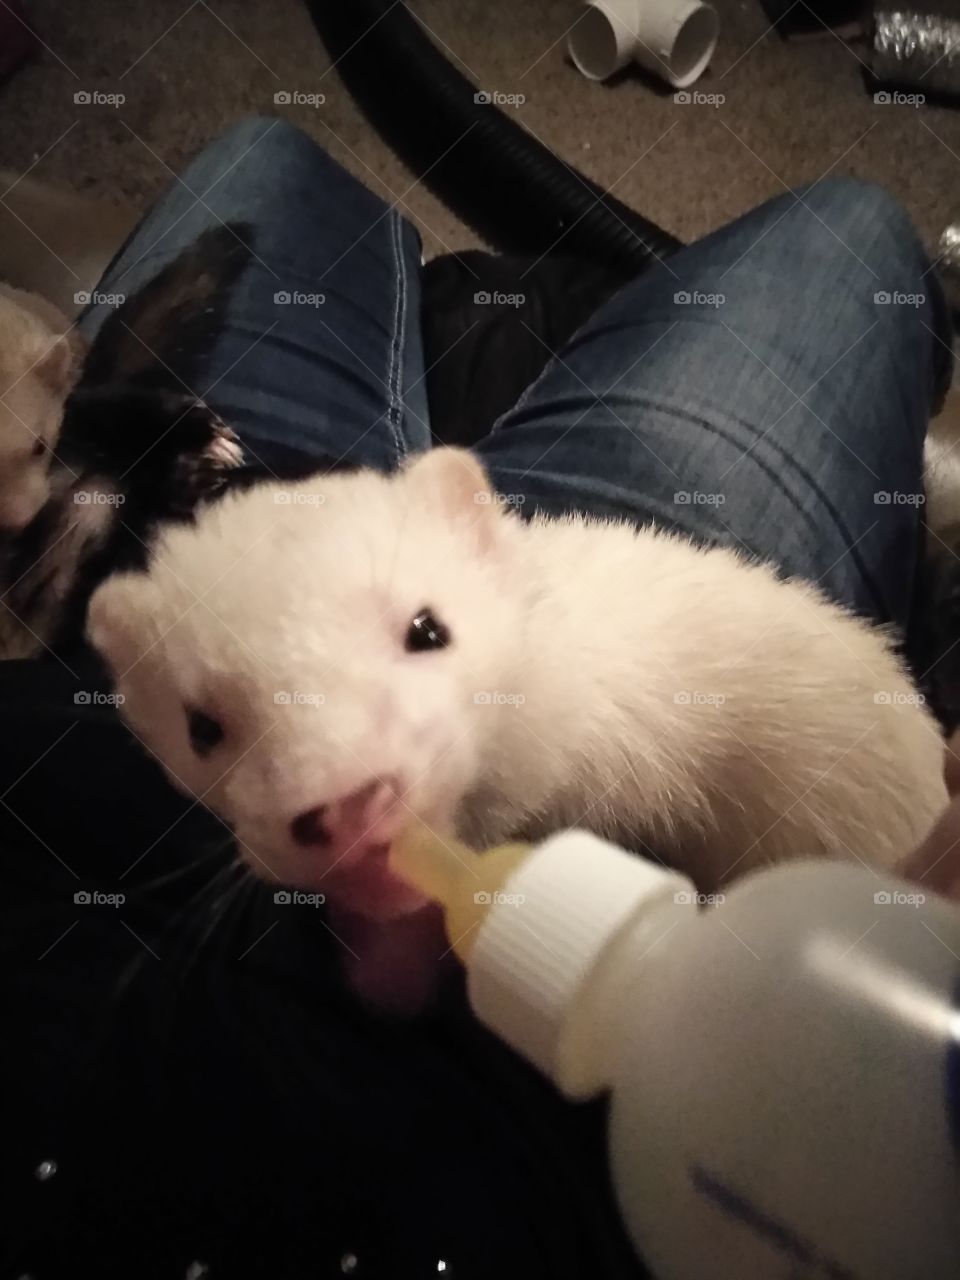 my ferret Whitey Bulger drink out a bottle